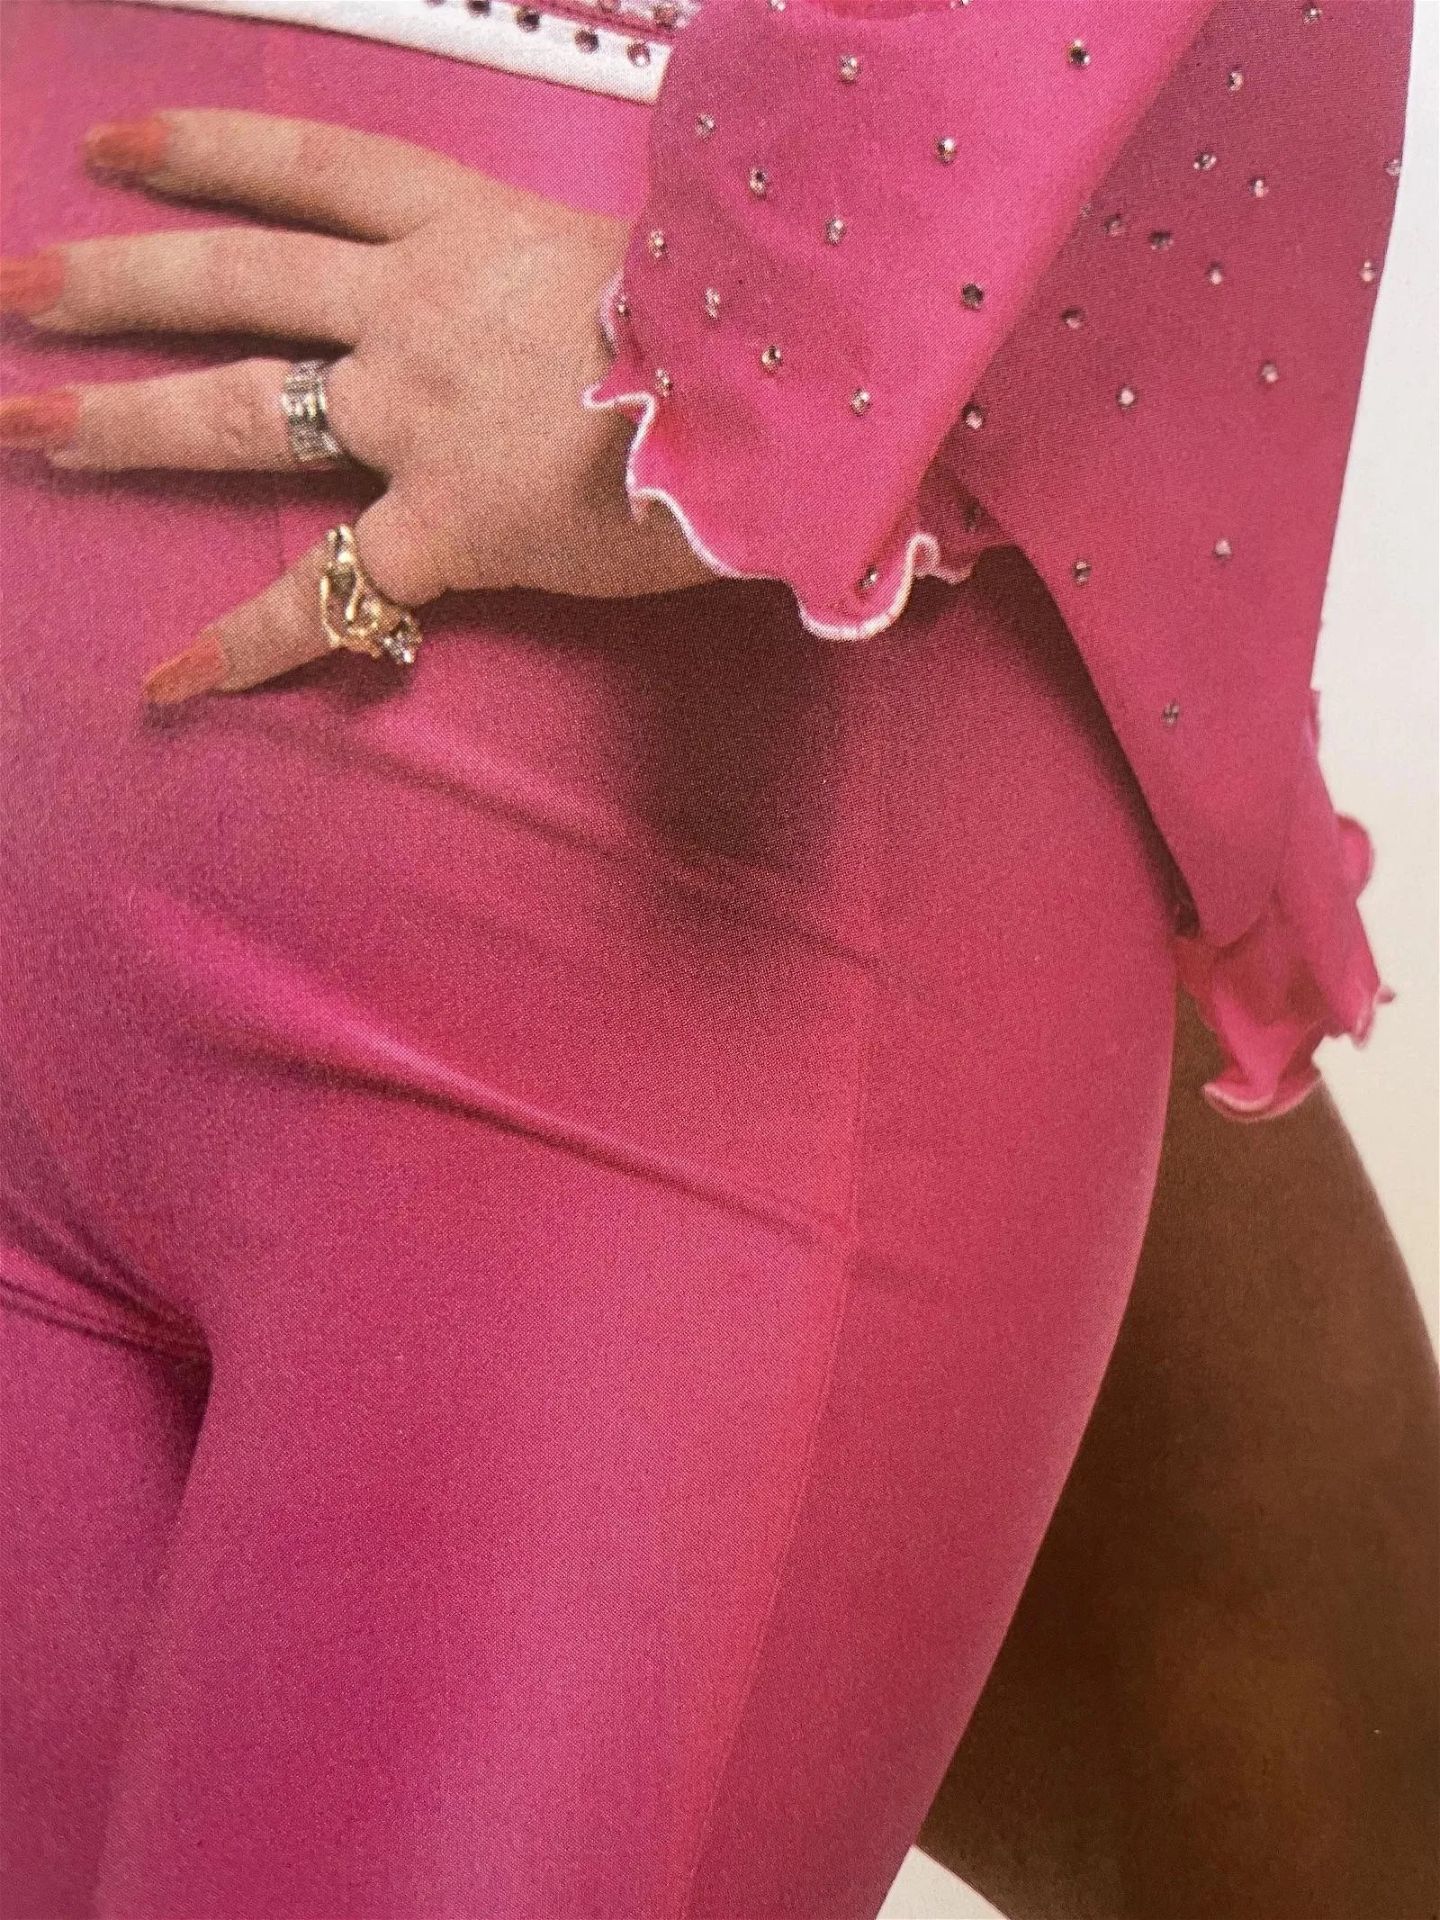 Annie Liebovitz "Dolly Parton, Arnold Schwarzenegger, New York City, 1977" Print.
 - Image 5 of 5